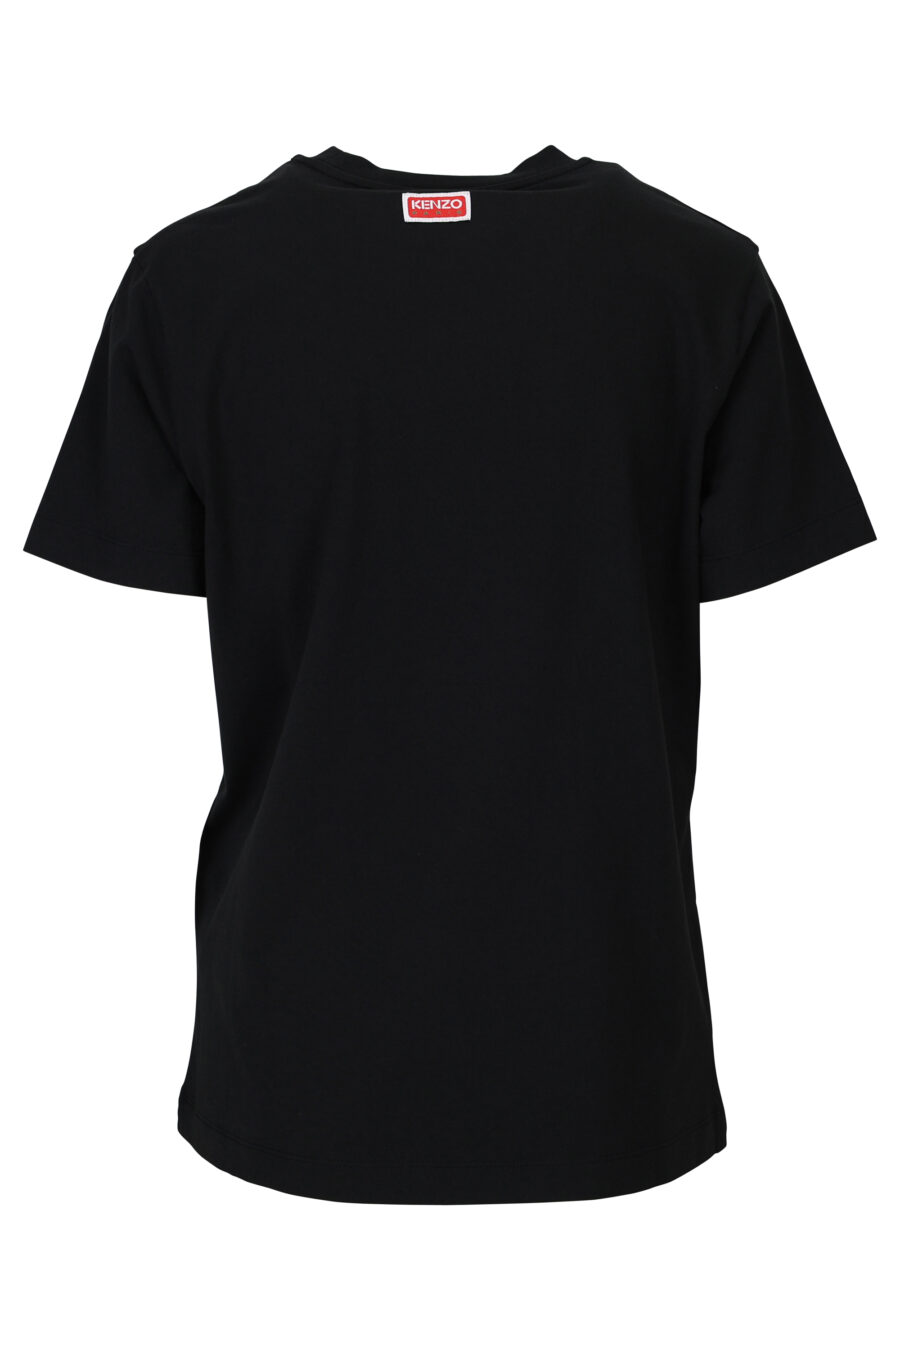 Schwarzes T-Shirt mit gelbem "kenzo target" Logo - 3612230510654 1